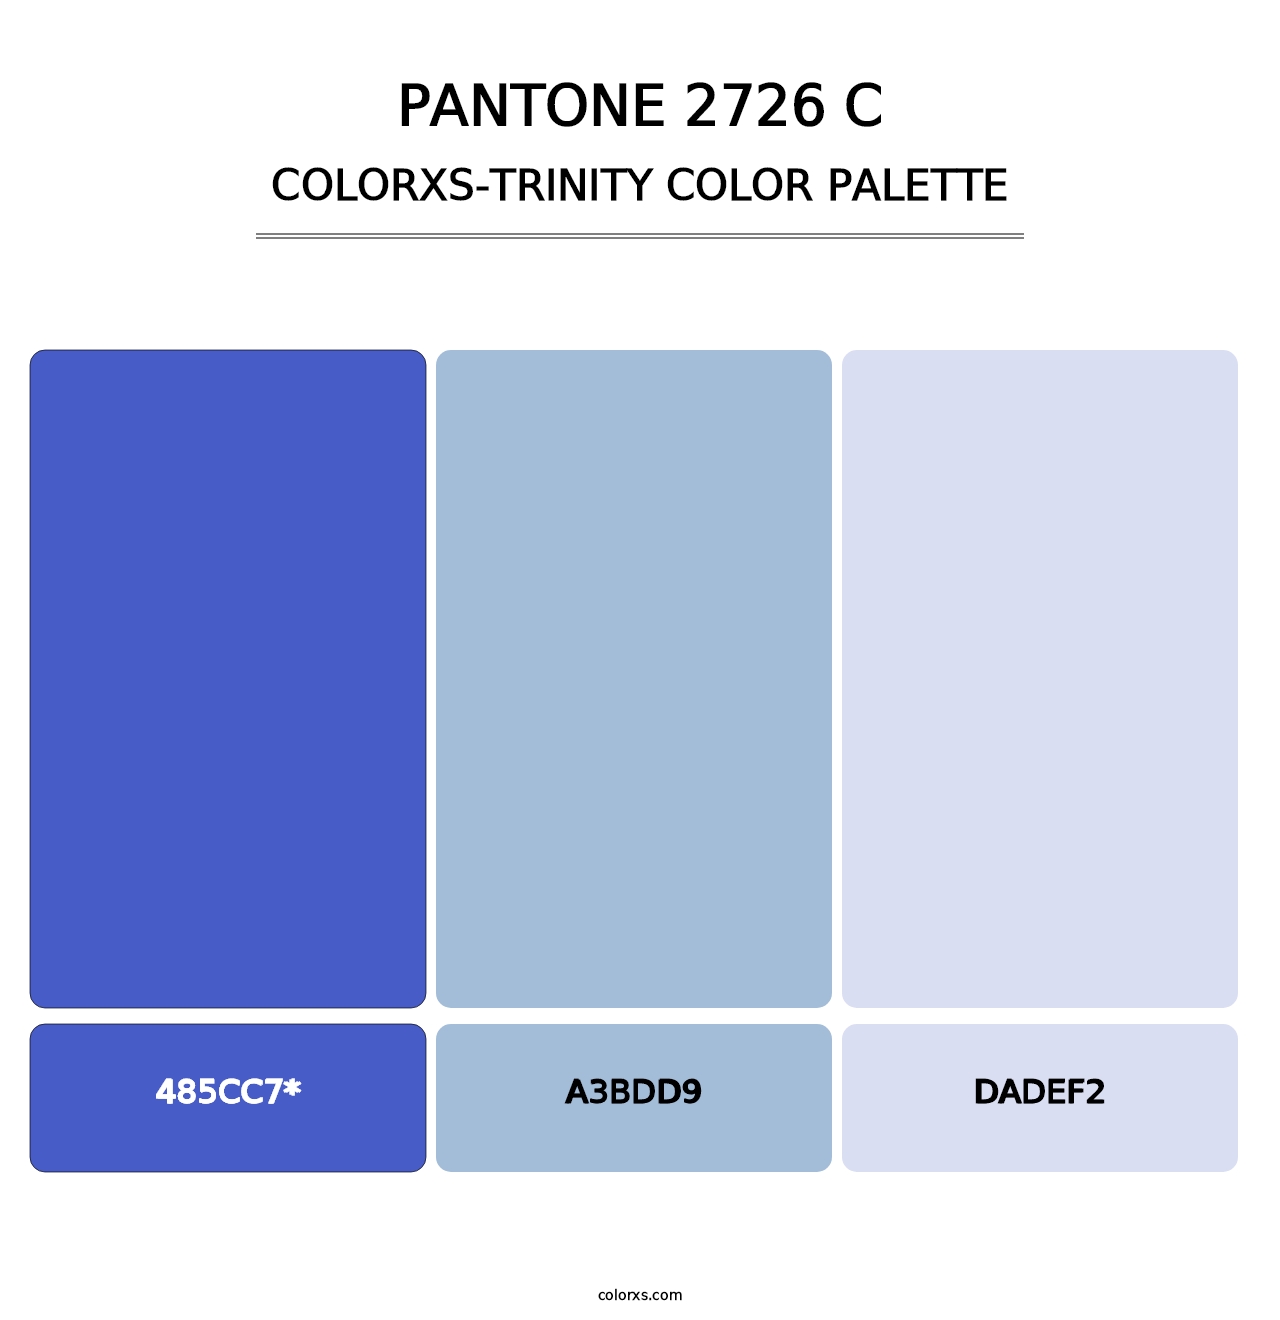 PANTONE 2726 C - Colorxs Trinity Palette